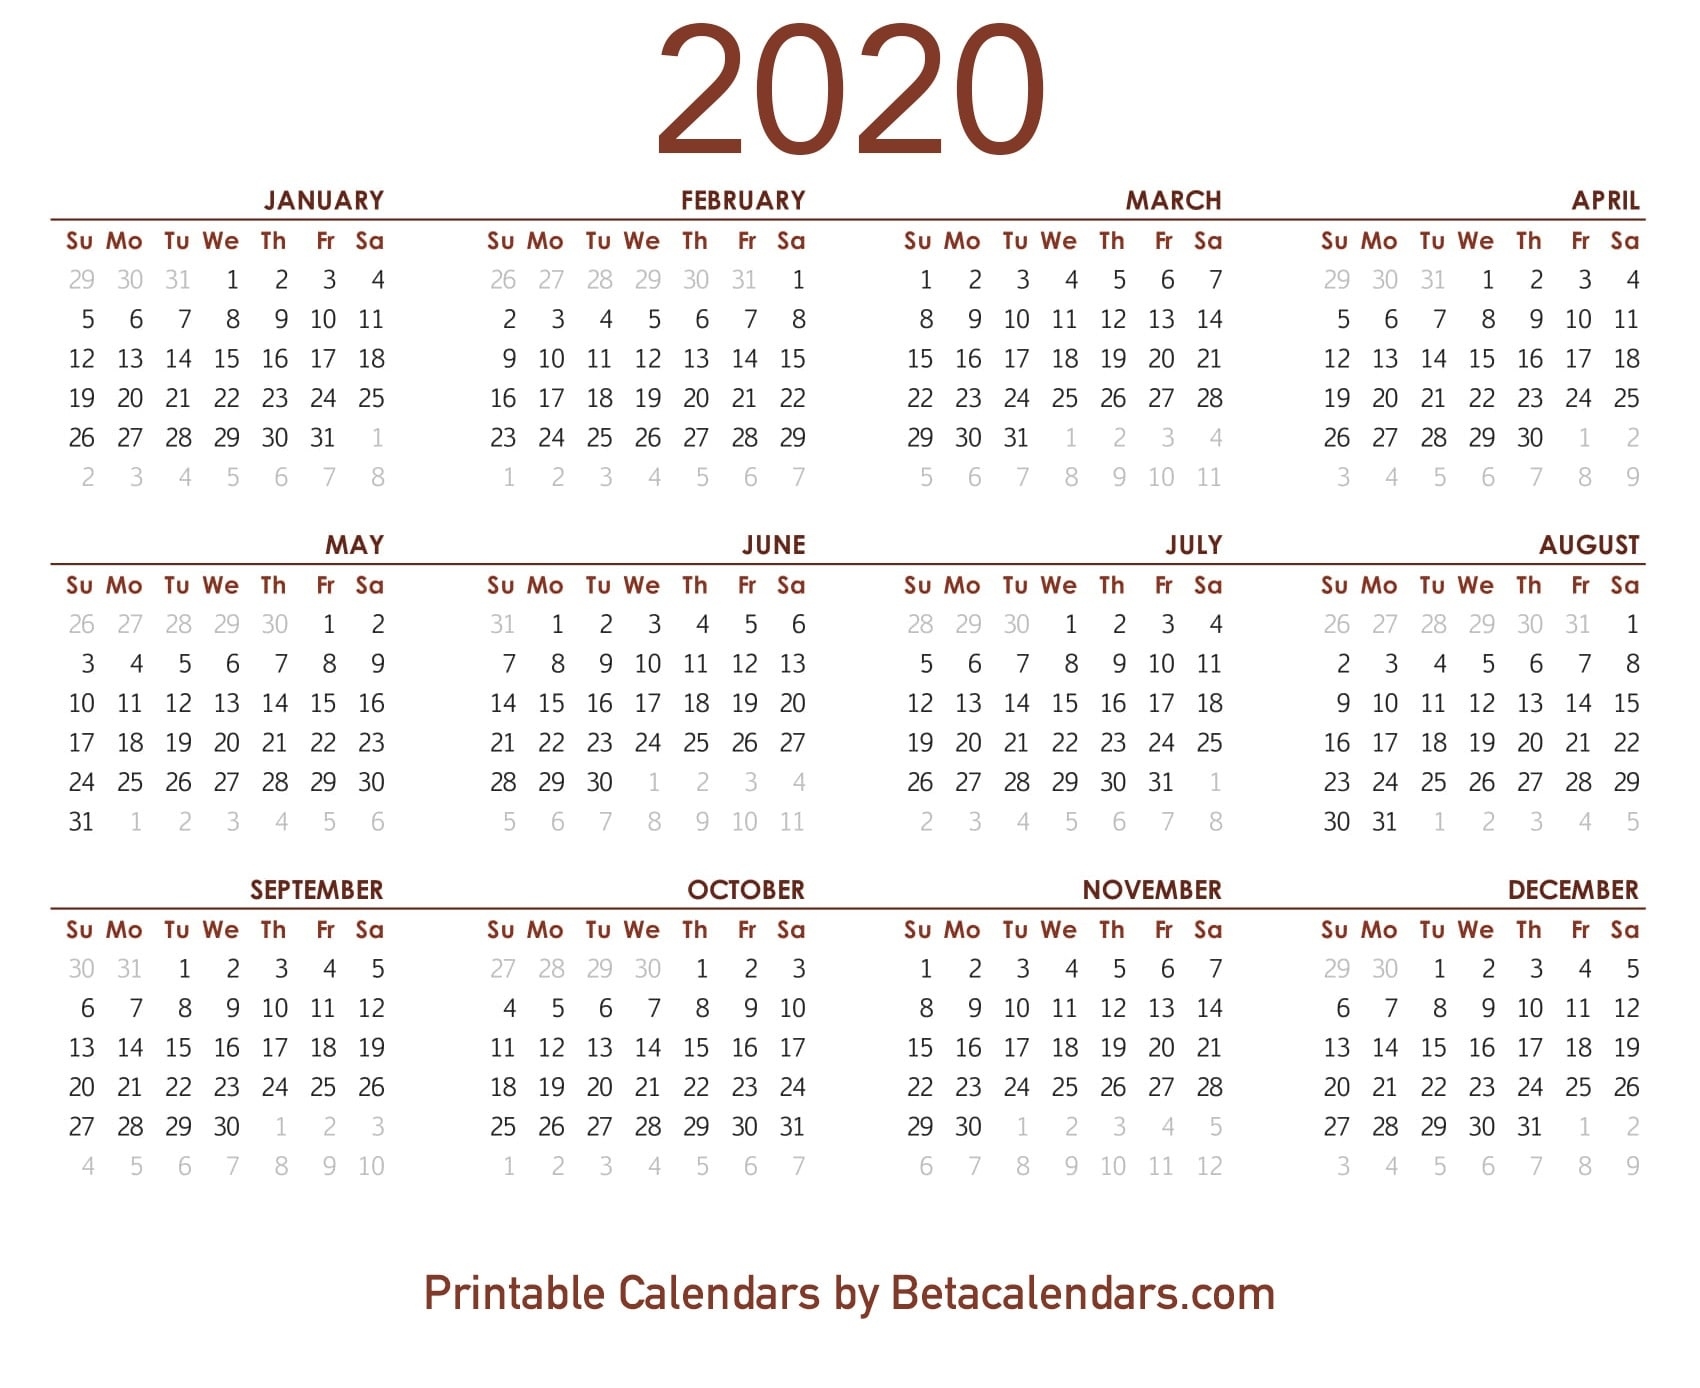 2020 Calendar - Free Printable Yearly Calendar 2020 Printable Calendar 2020 Iwth Lunar Dates